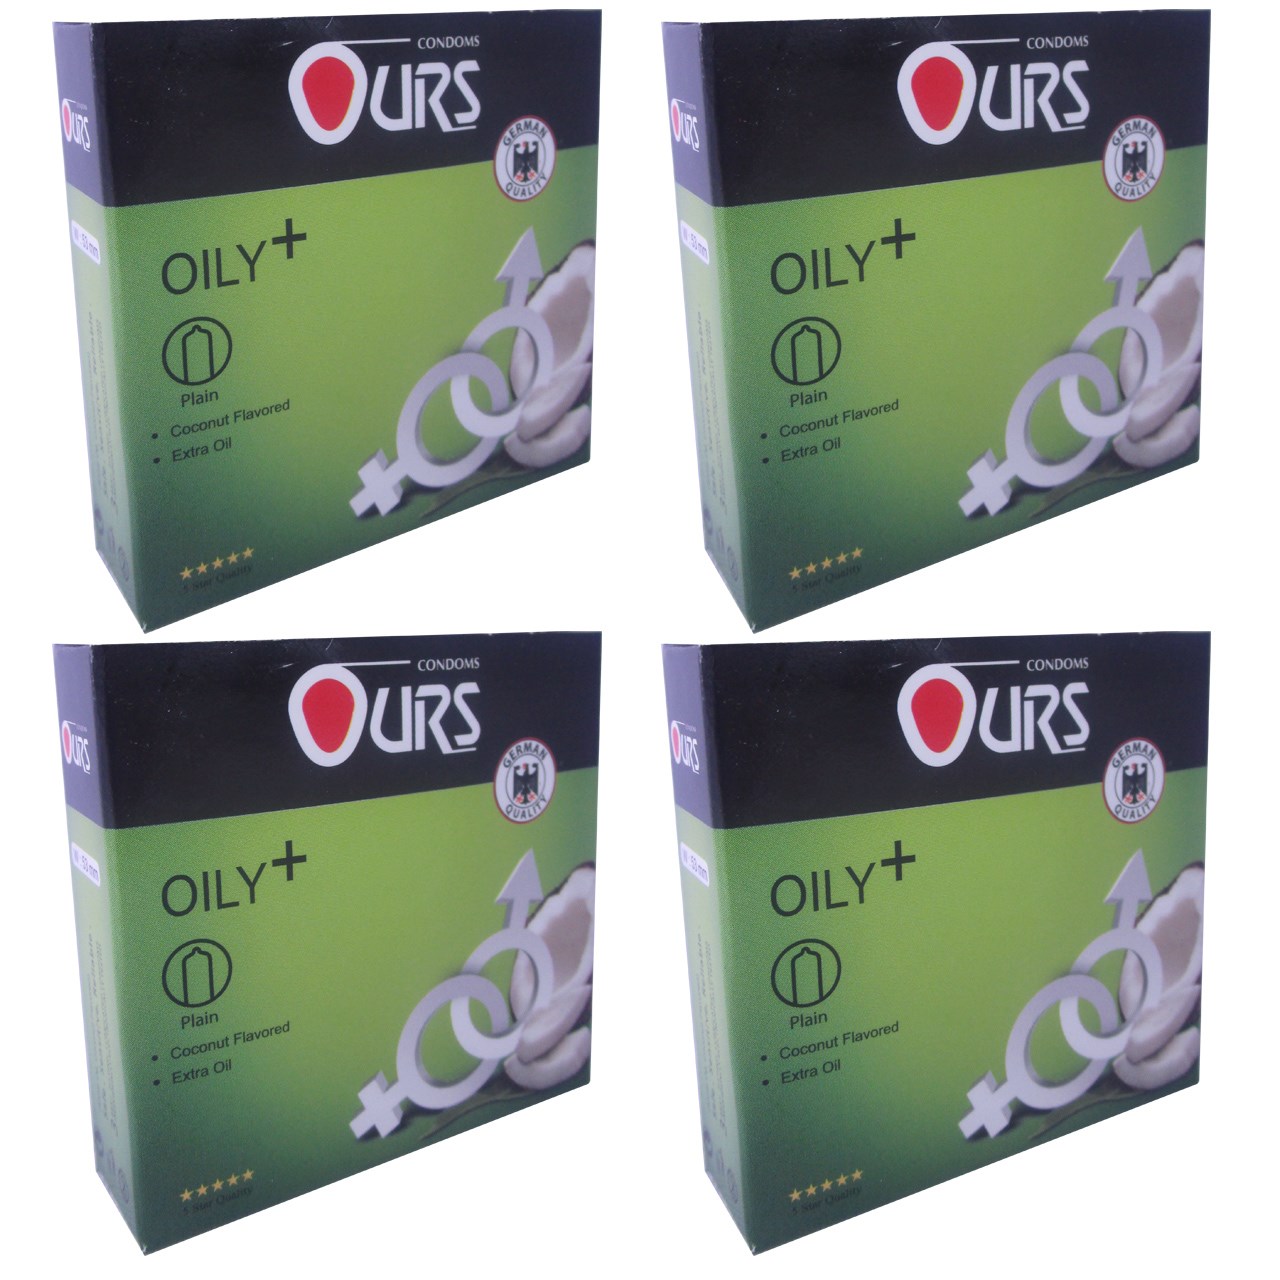 پک 4 بسته ای کاندوم Ours مدل Oily هر بسته 3 عدد